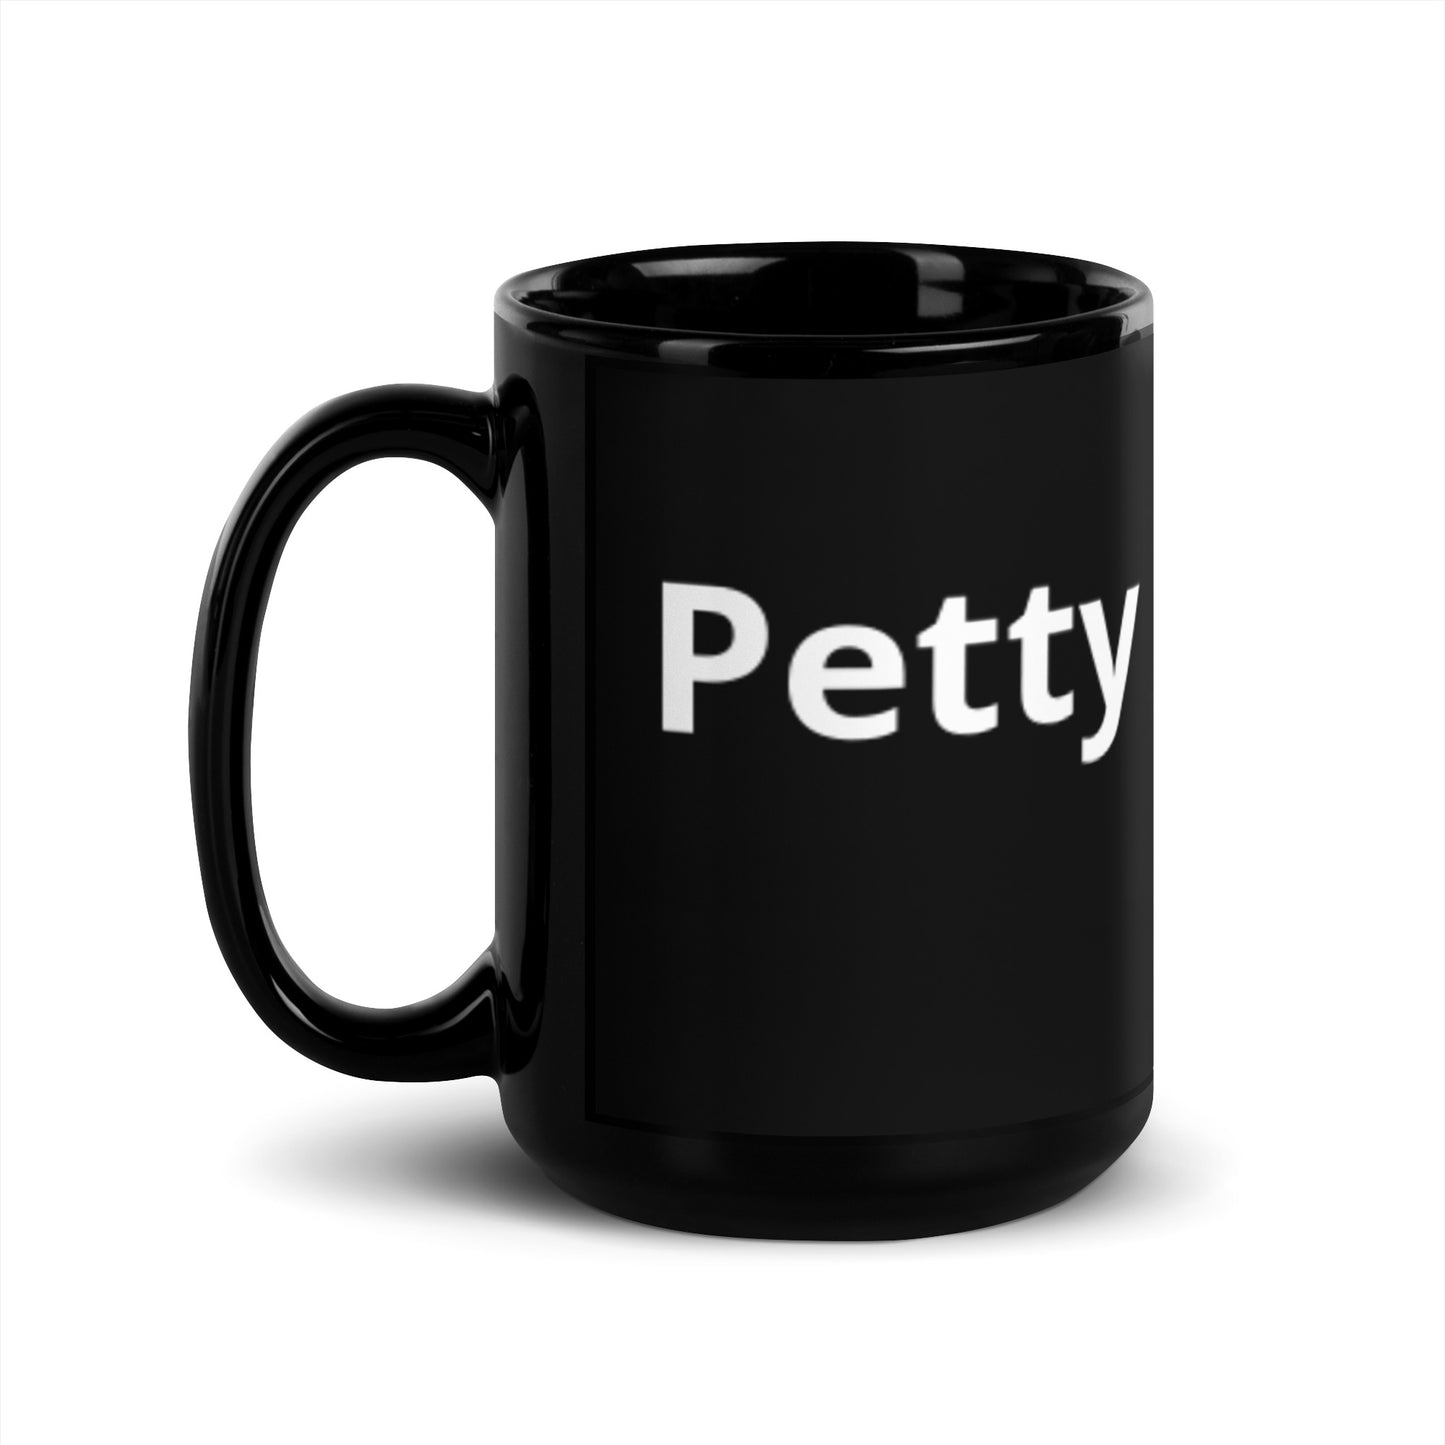 Petty